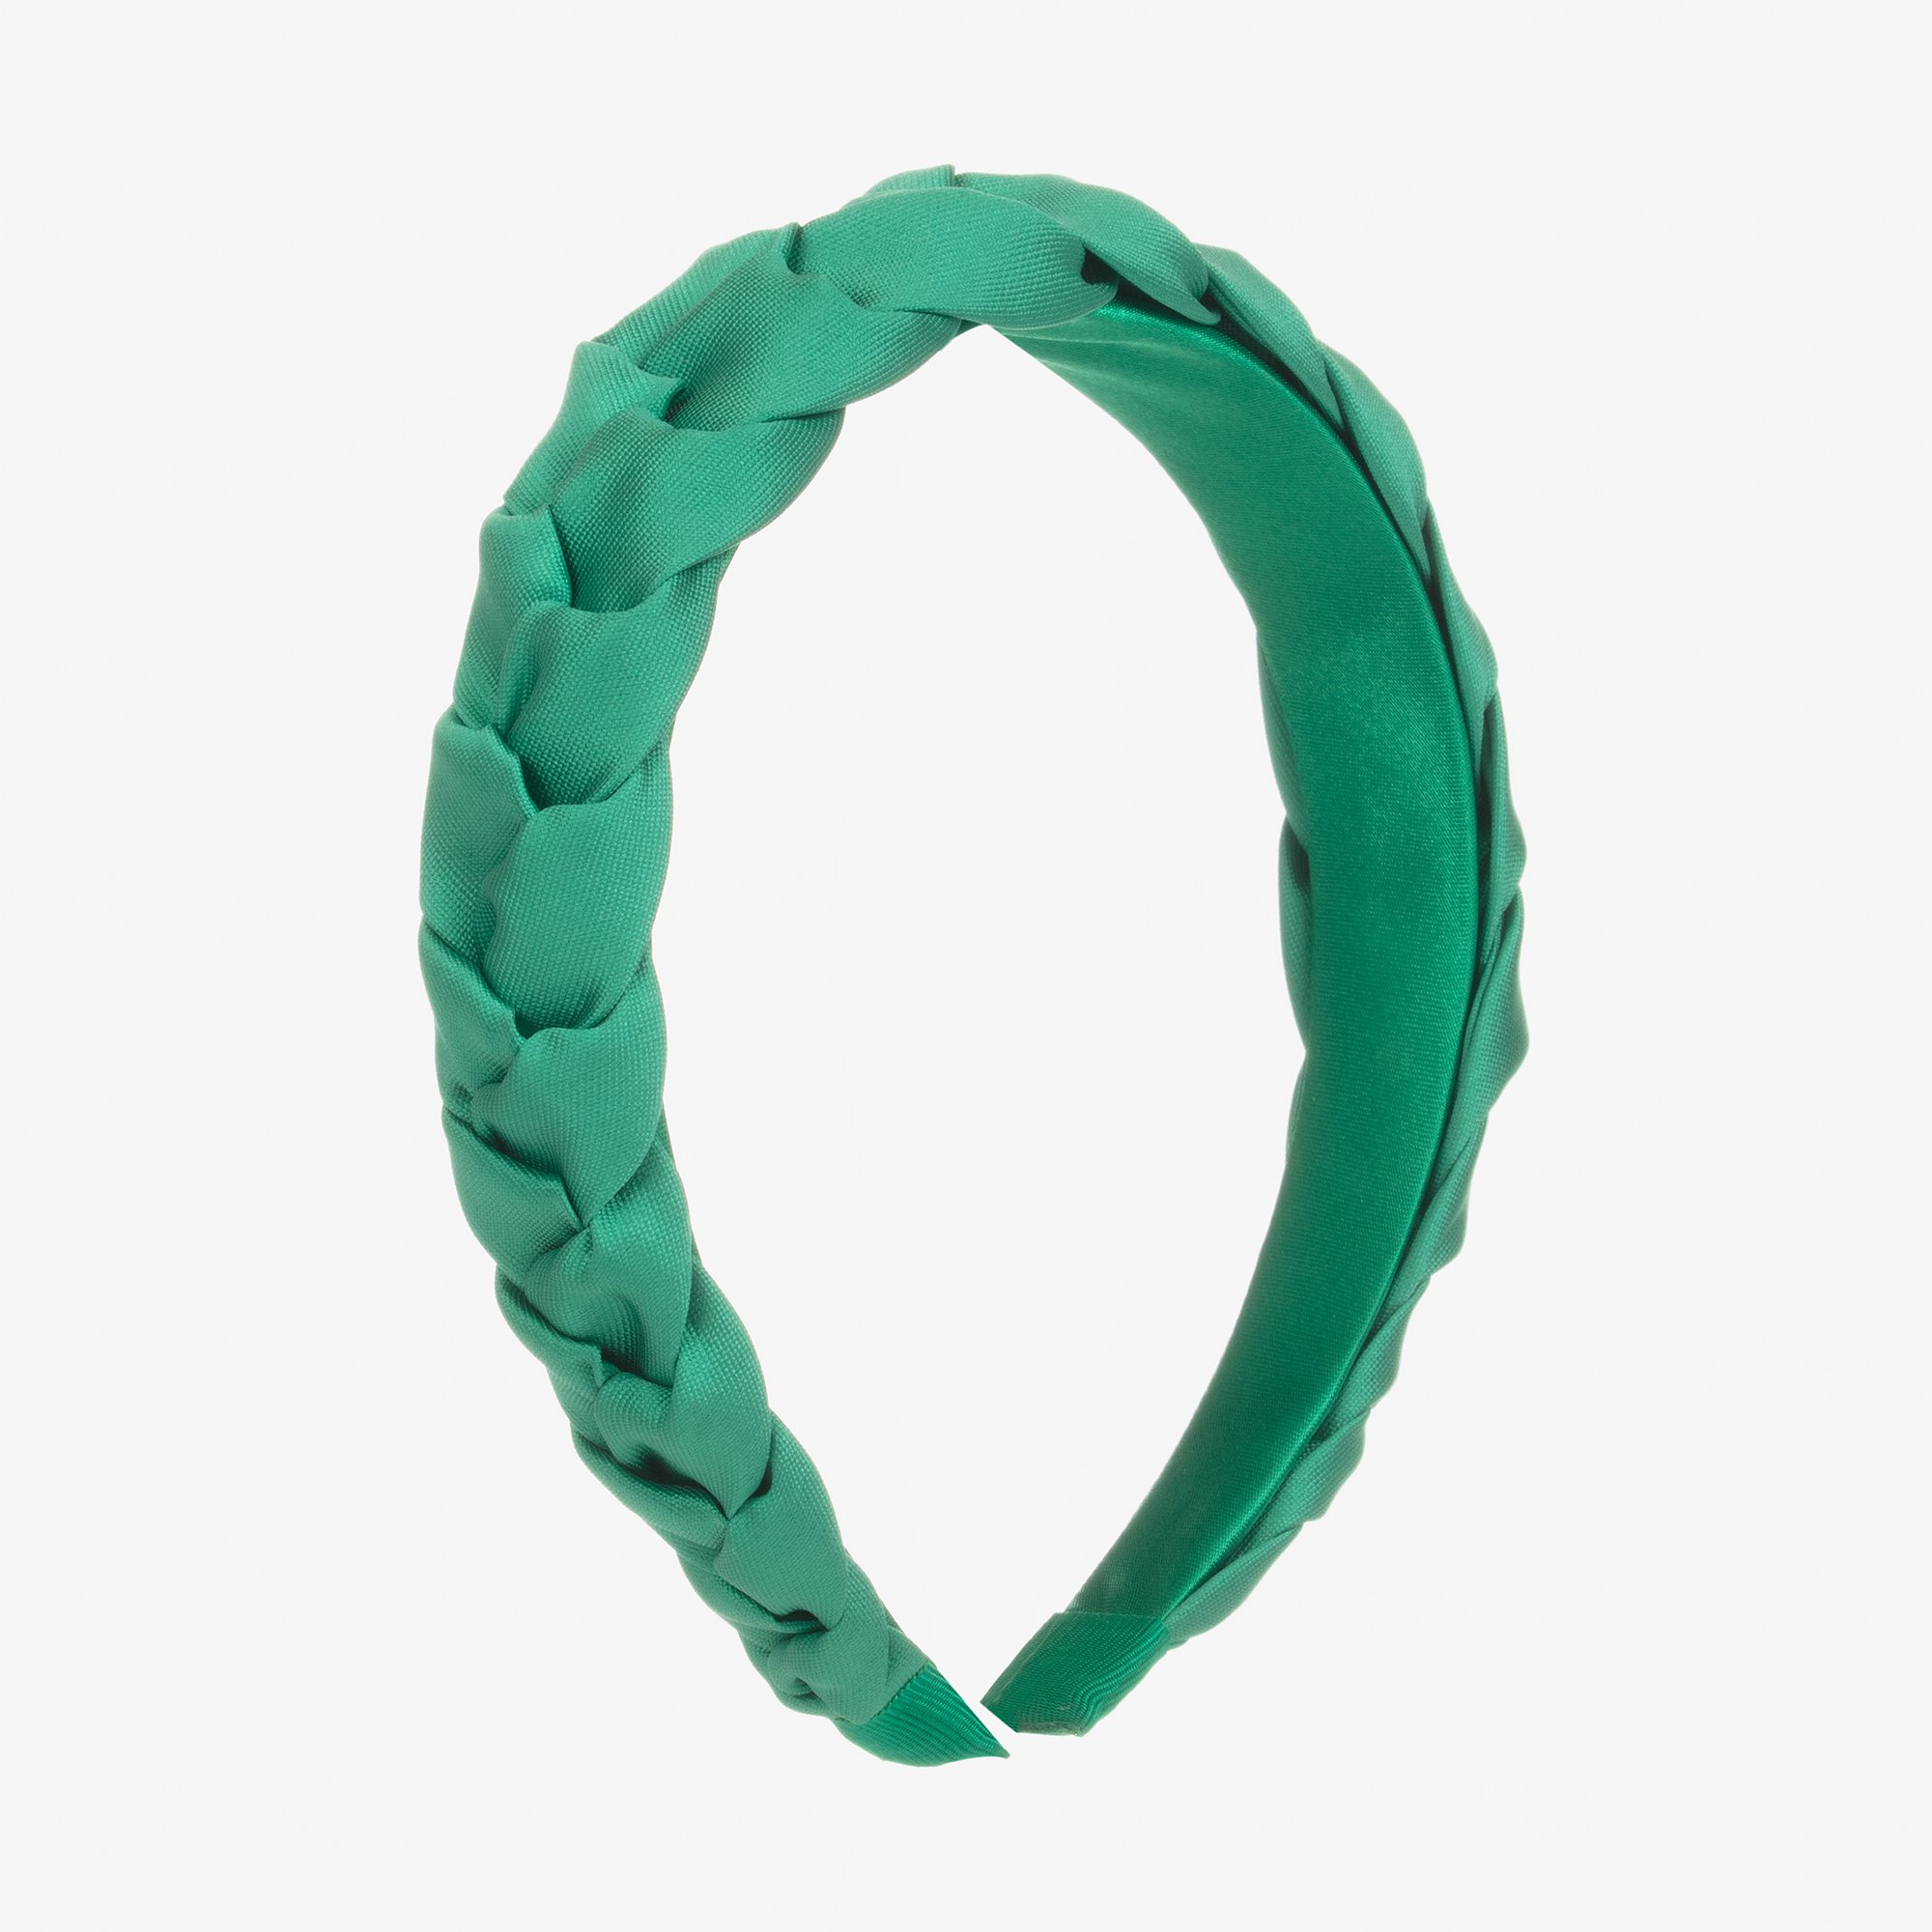 Hucklebones Braided Headband in Green Satin.jpg